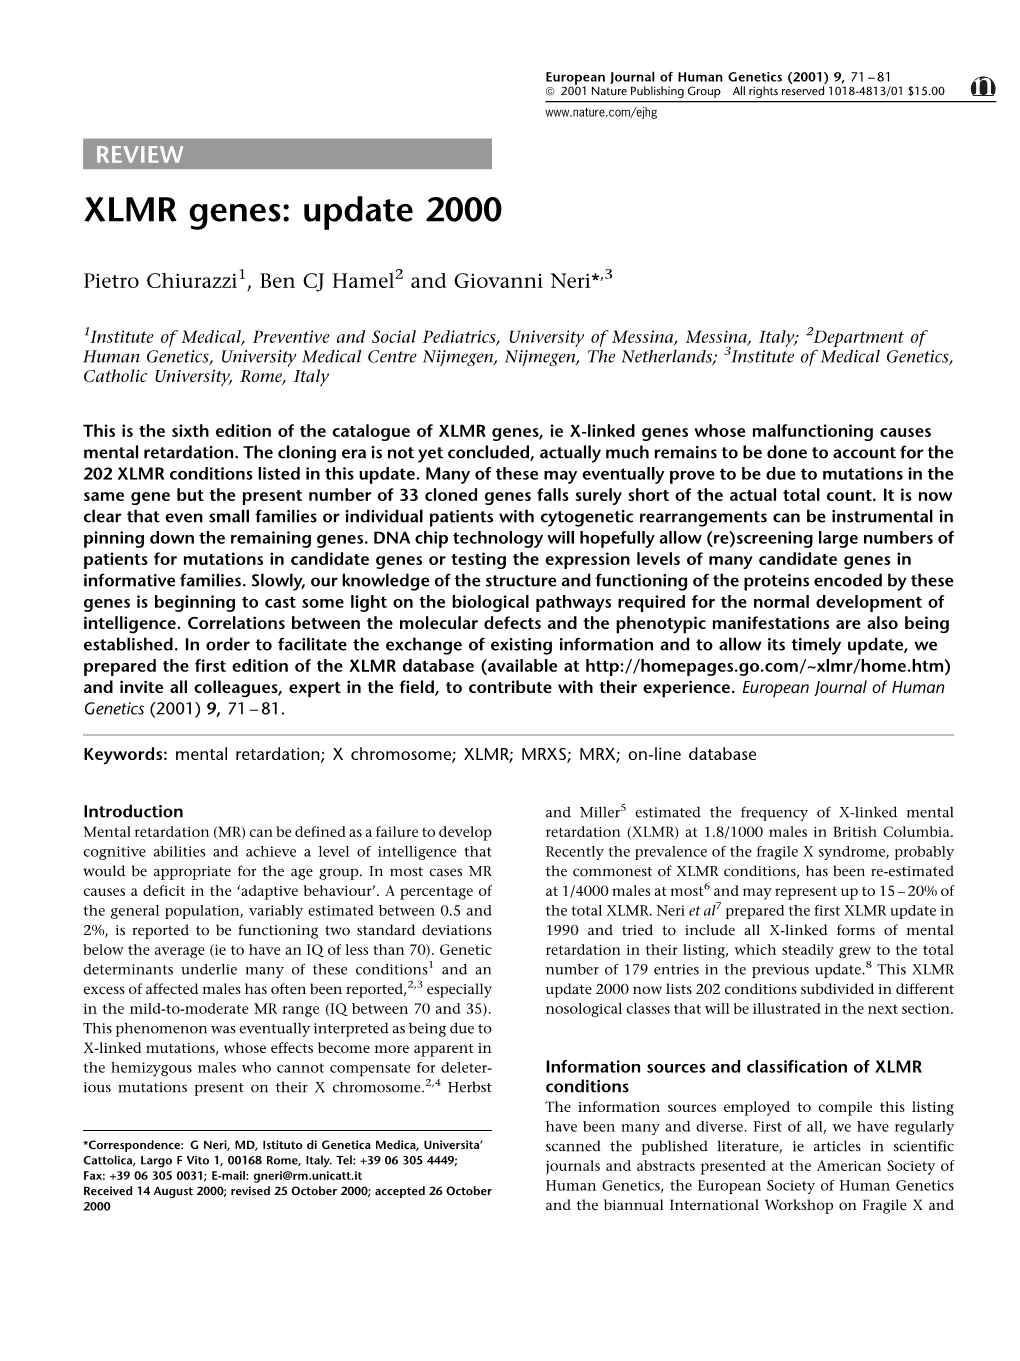 XLMR Genes: Update 2000